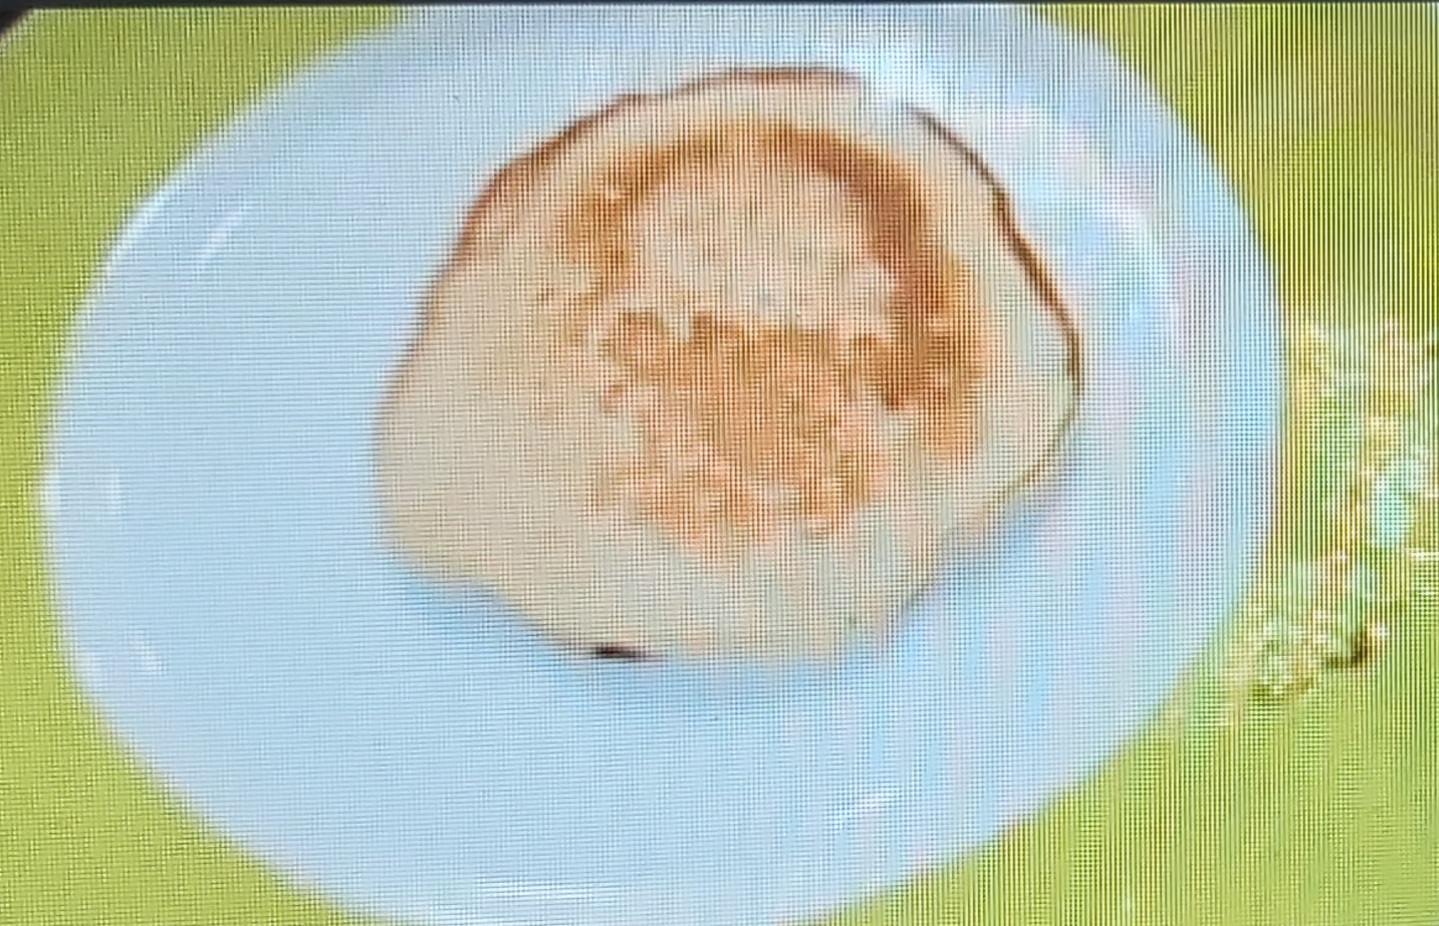 Cub made pancake